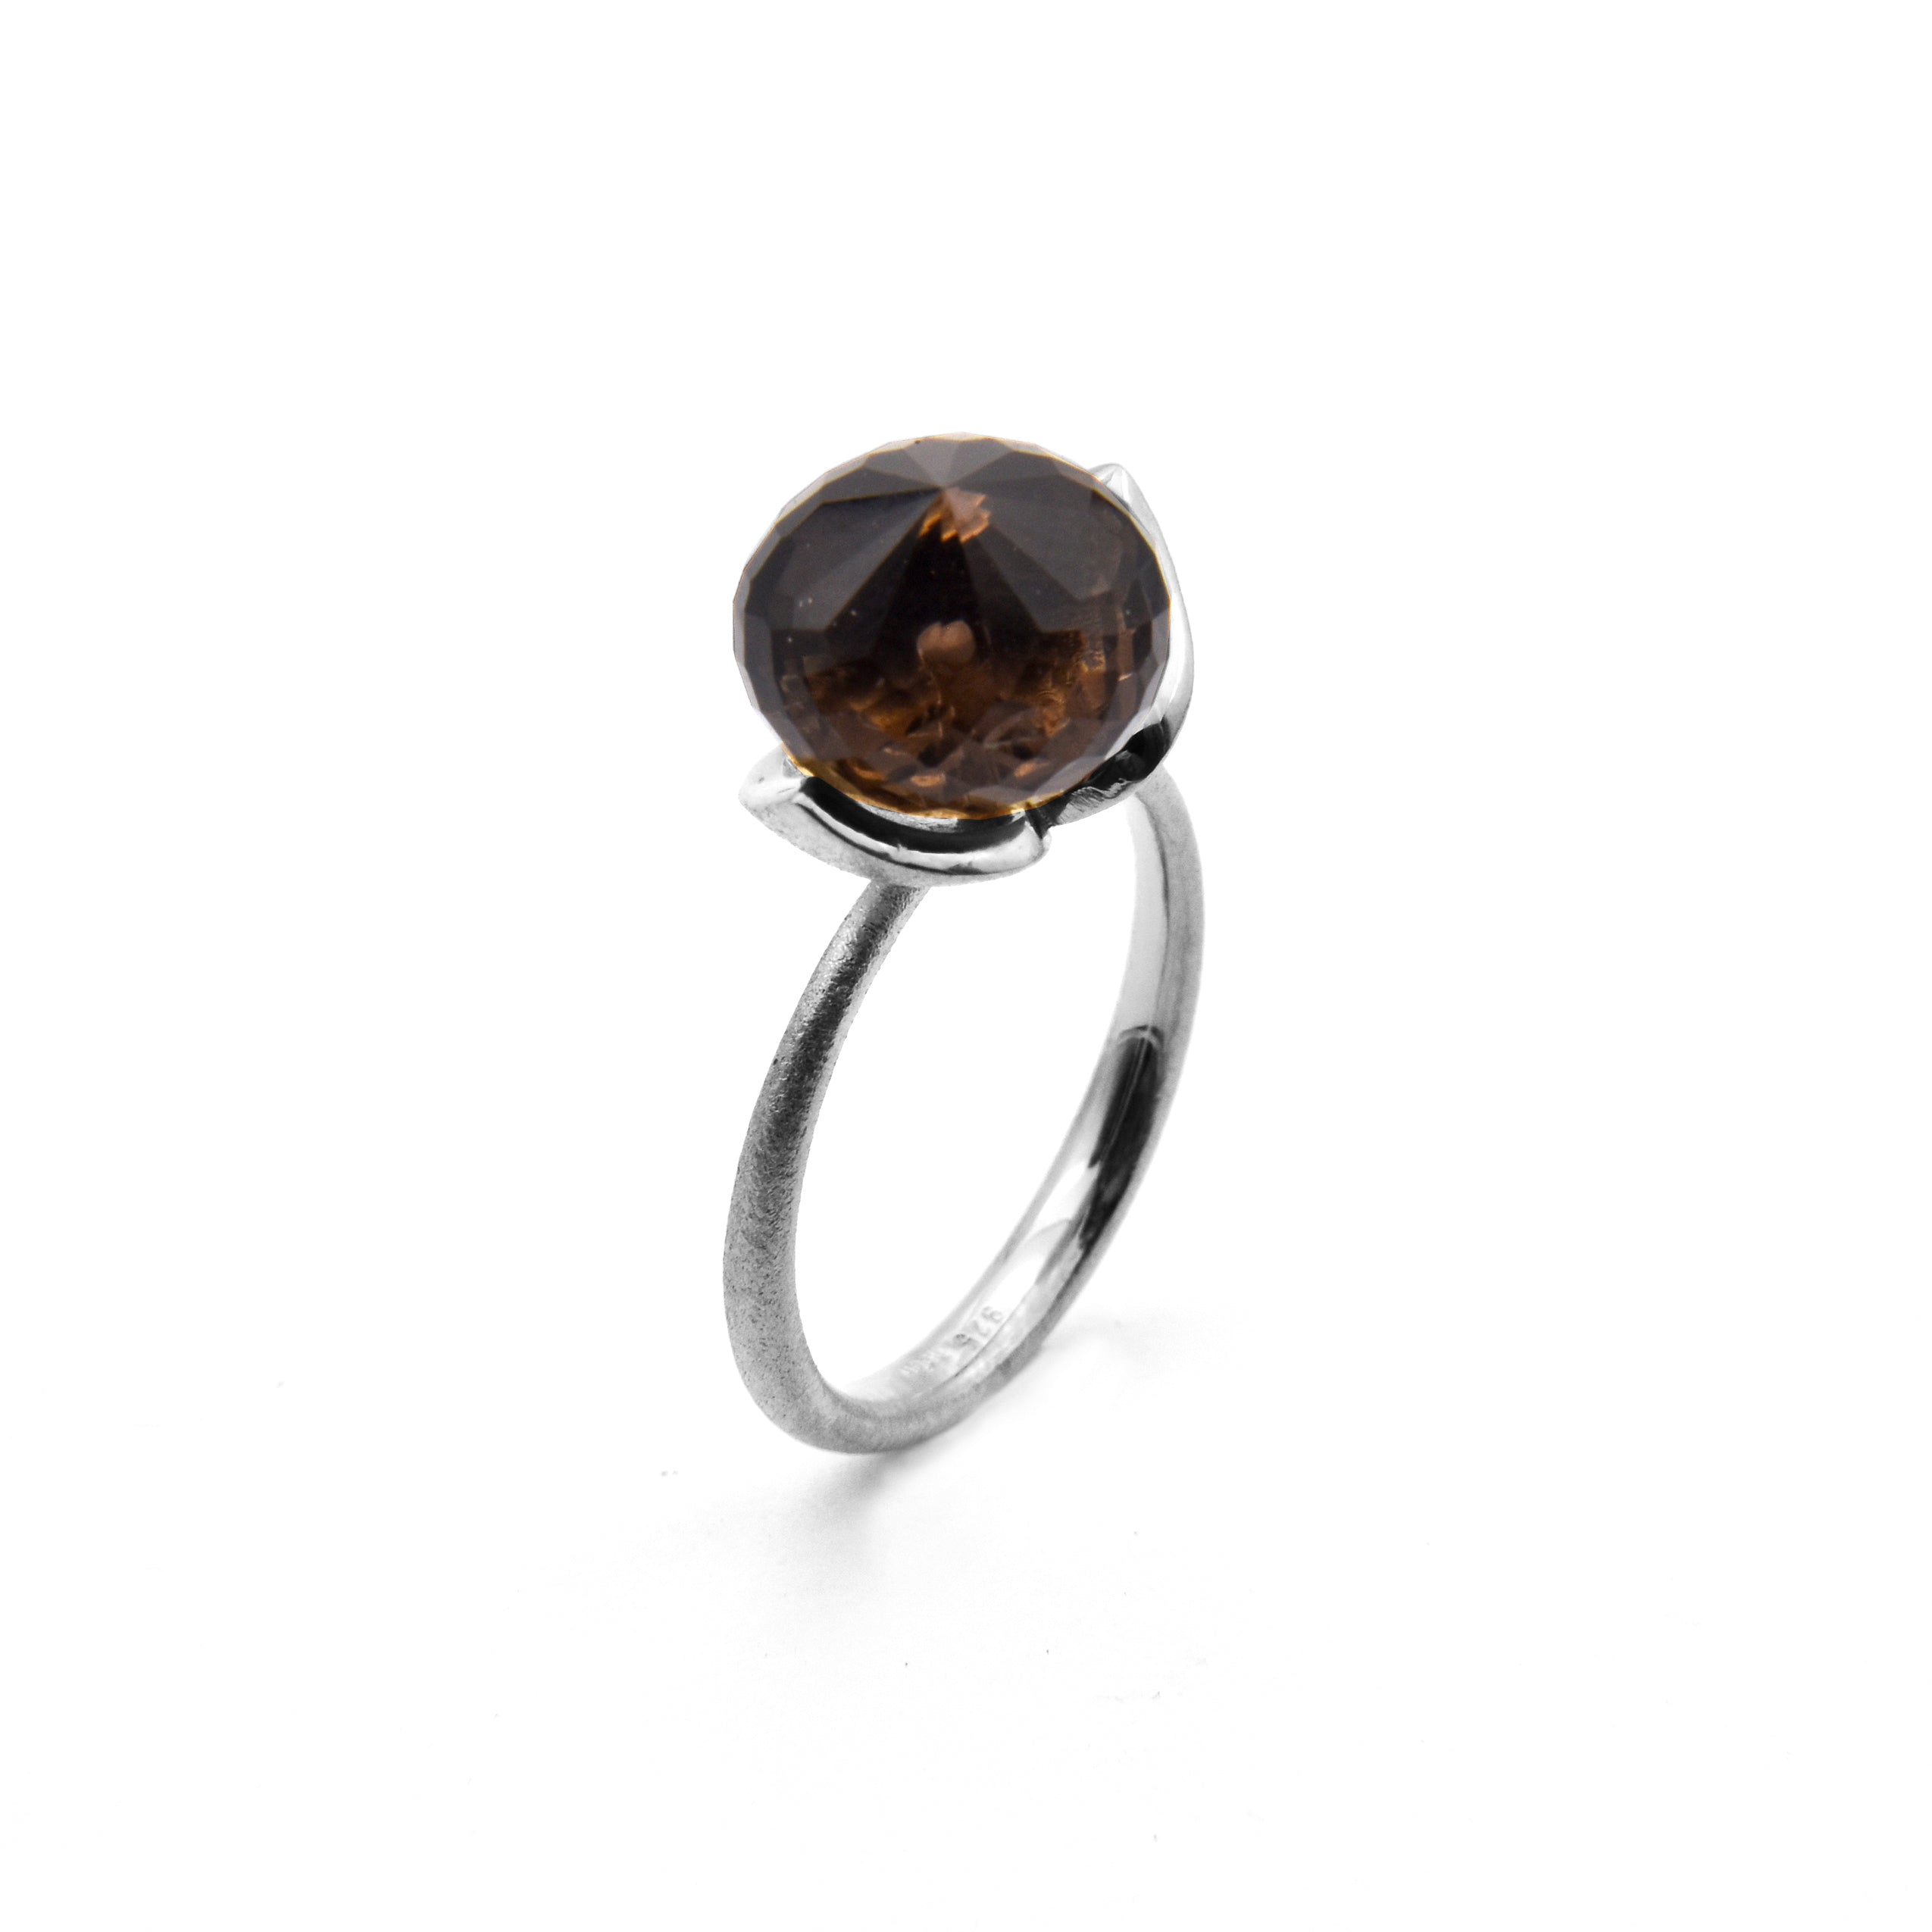 Dolce ring "medium" with smoky quartz 925/-